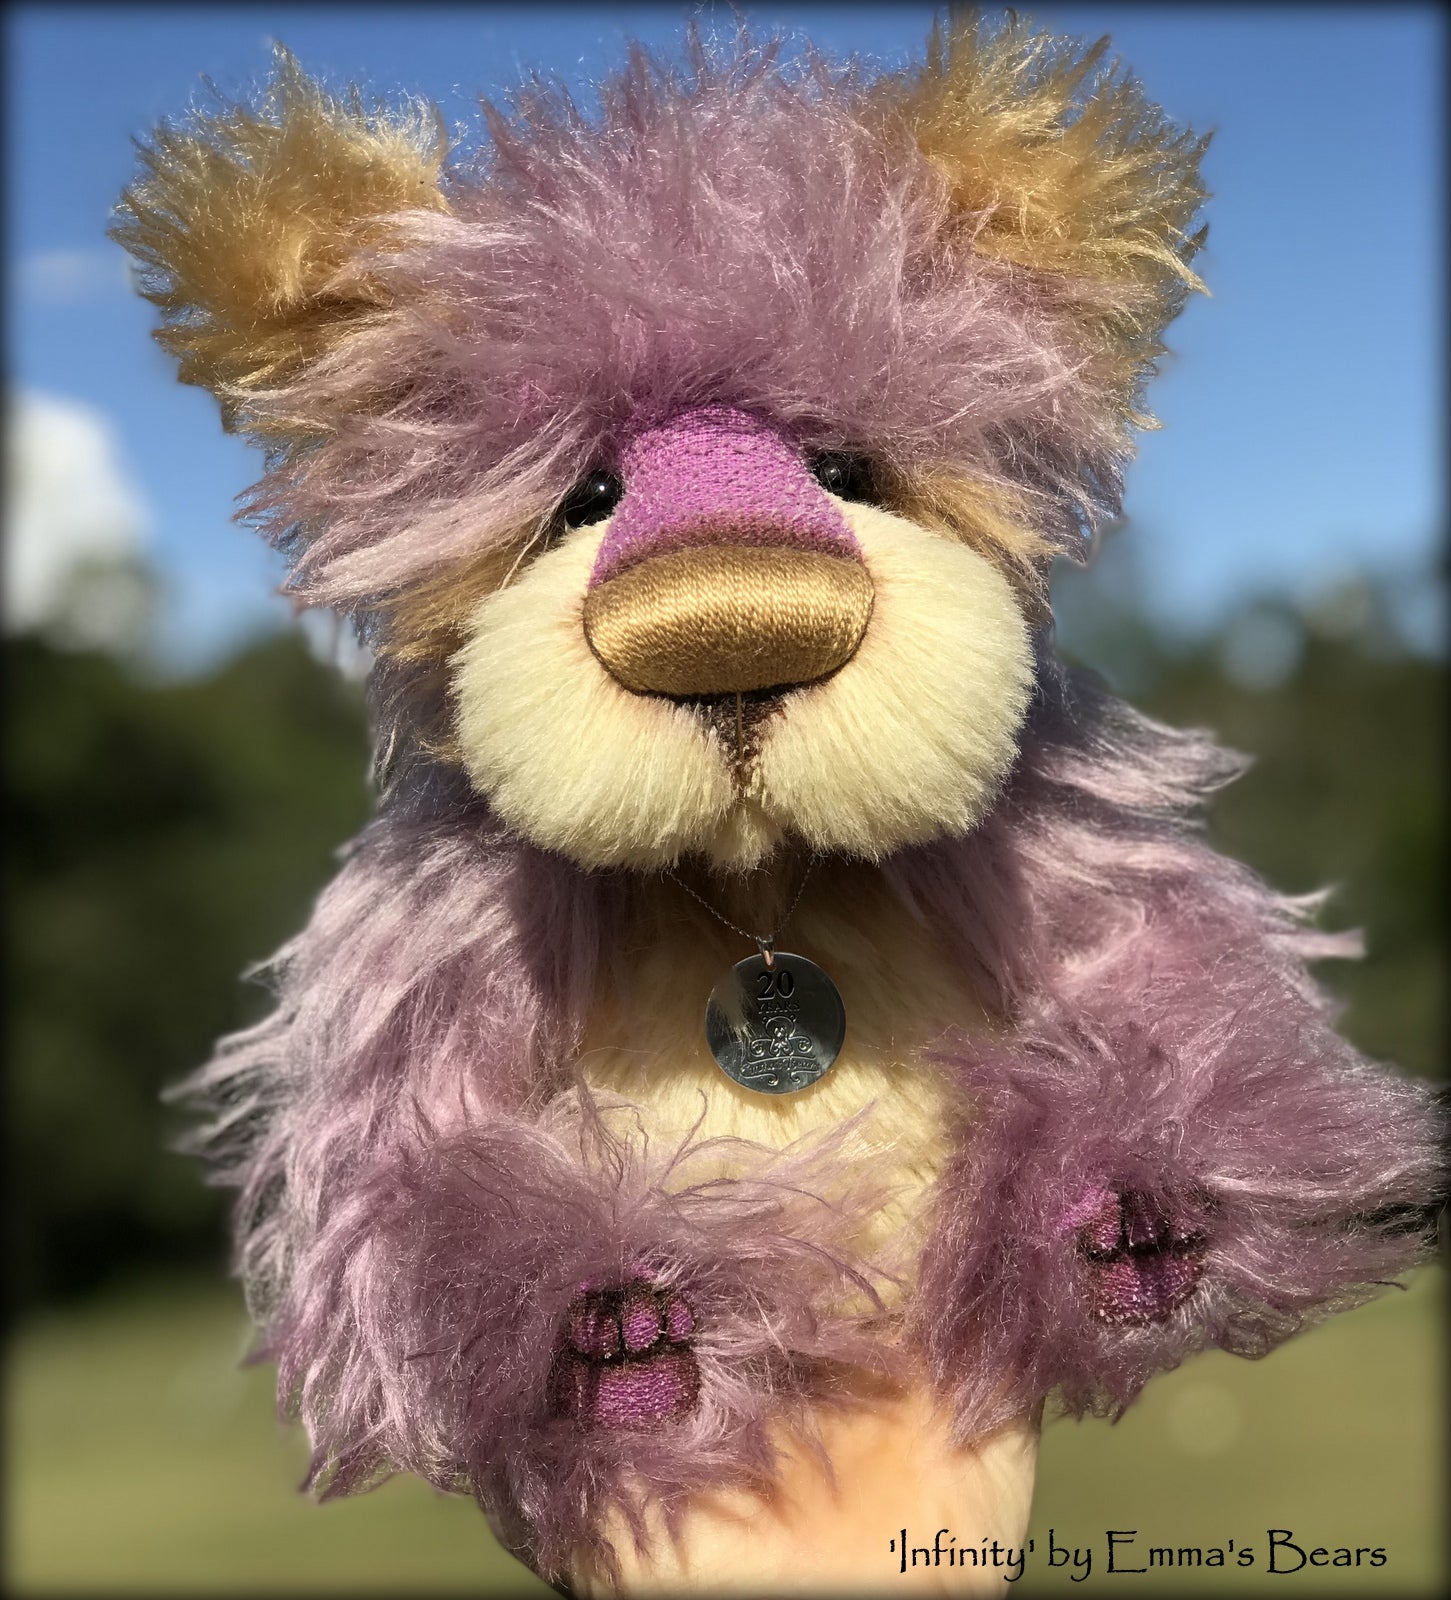 Infinity - 20 Years of Emma's Bears Commemorative Teddy - OOAK in a series